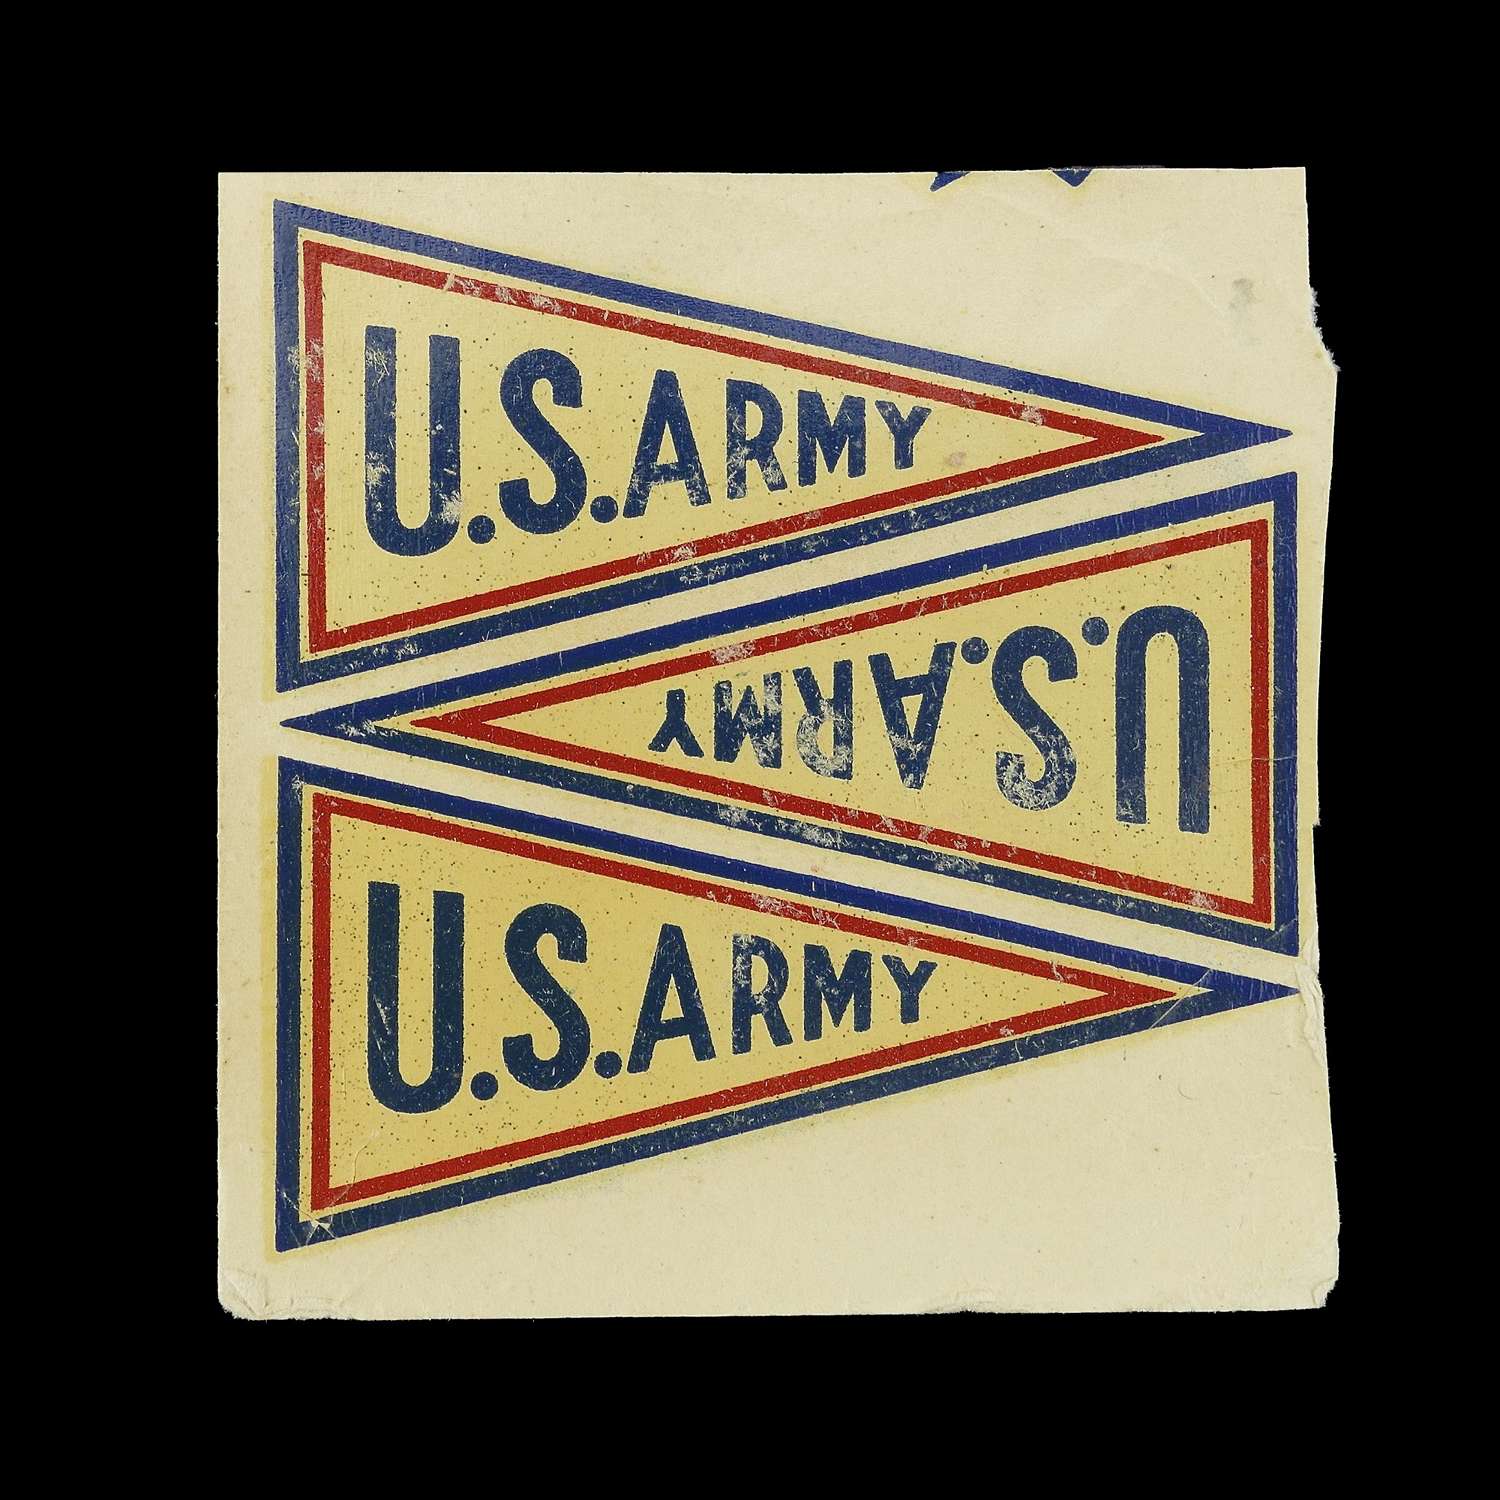 U.S. Army decals